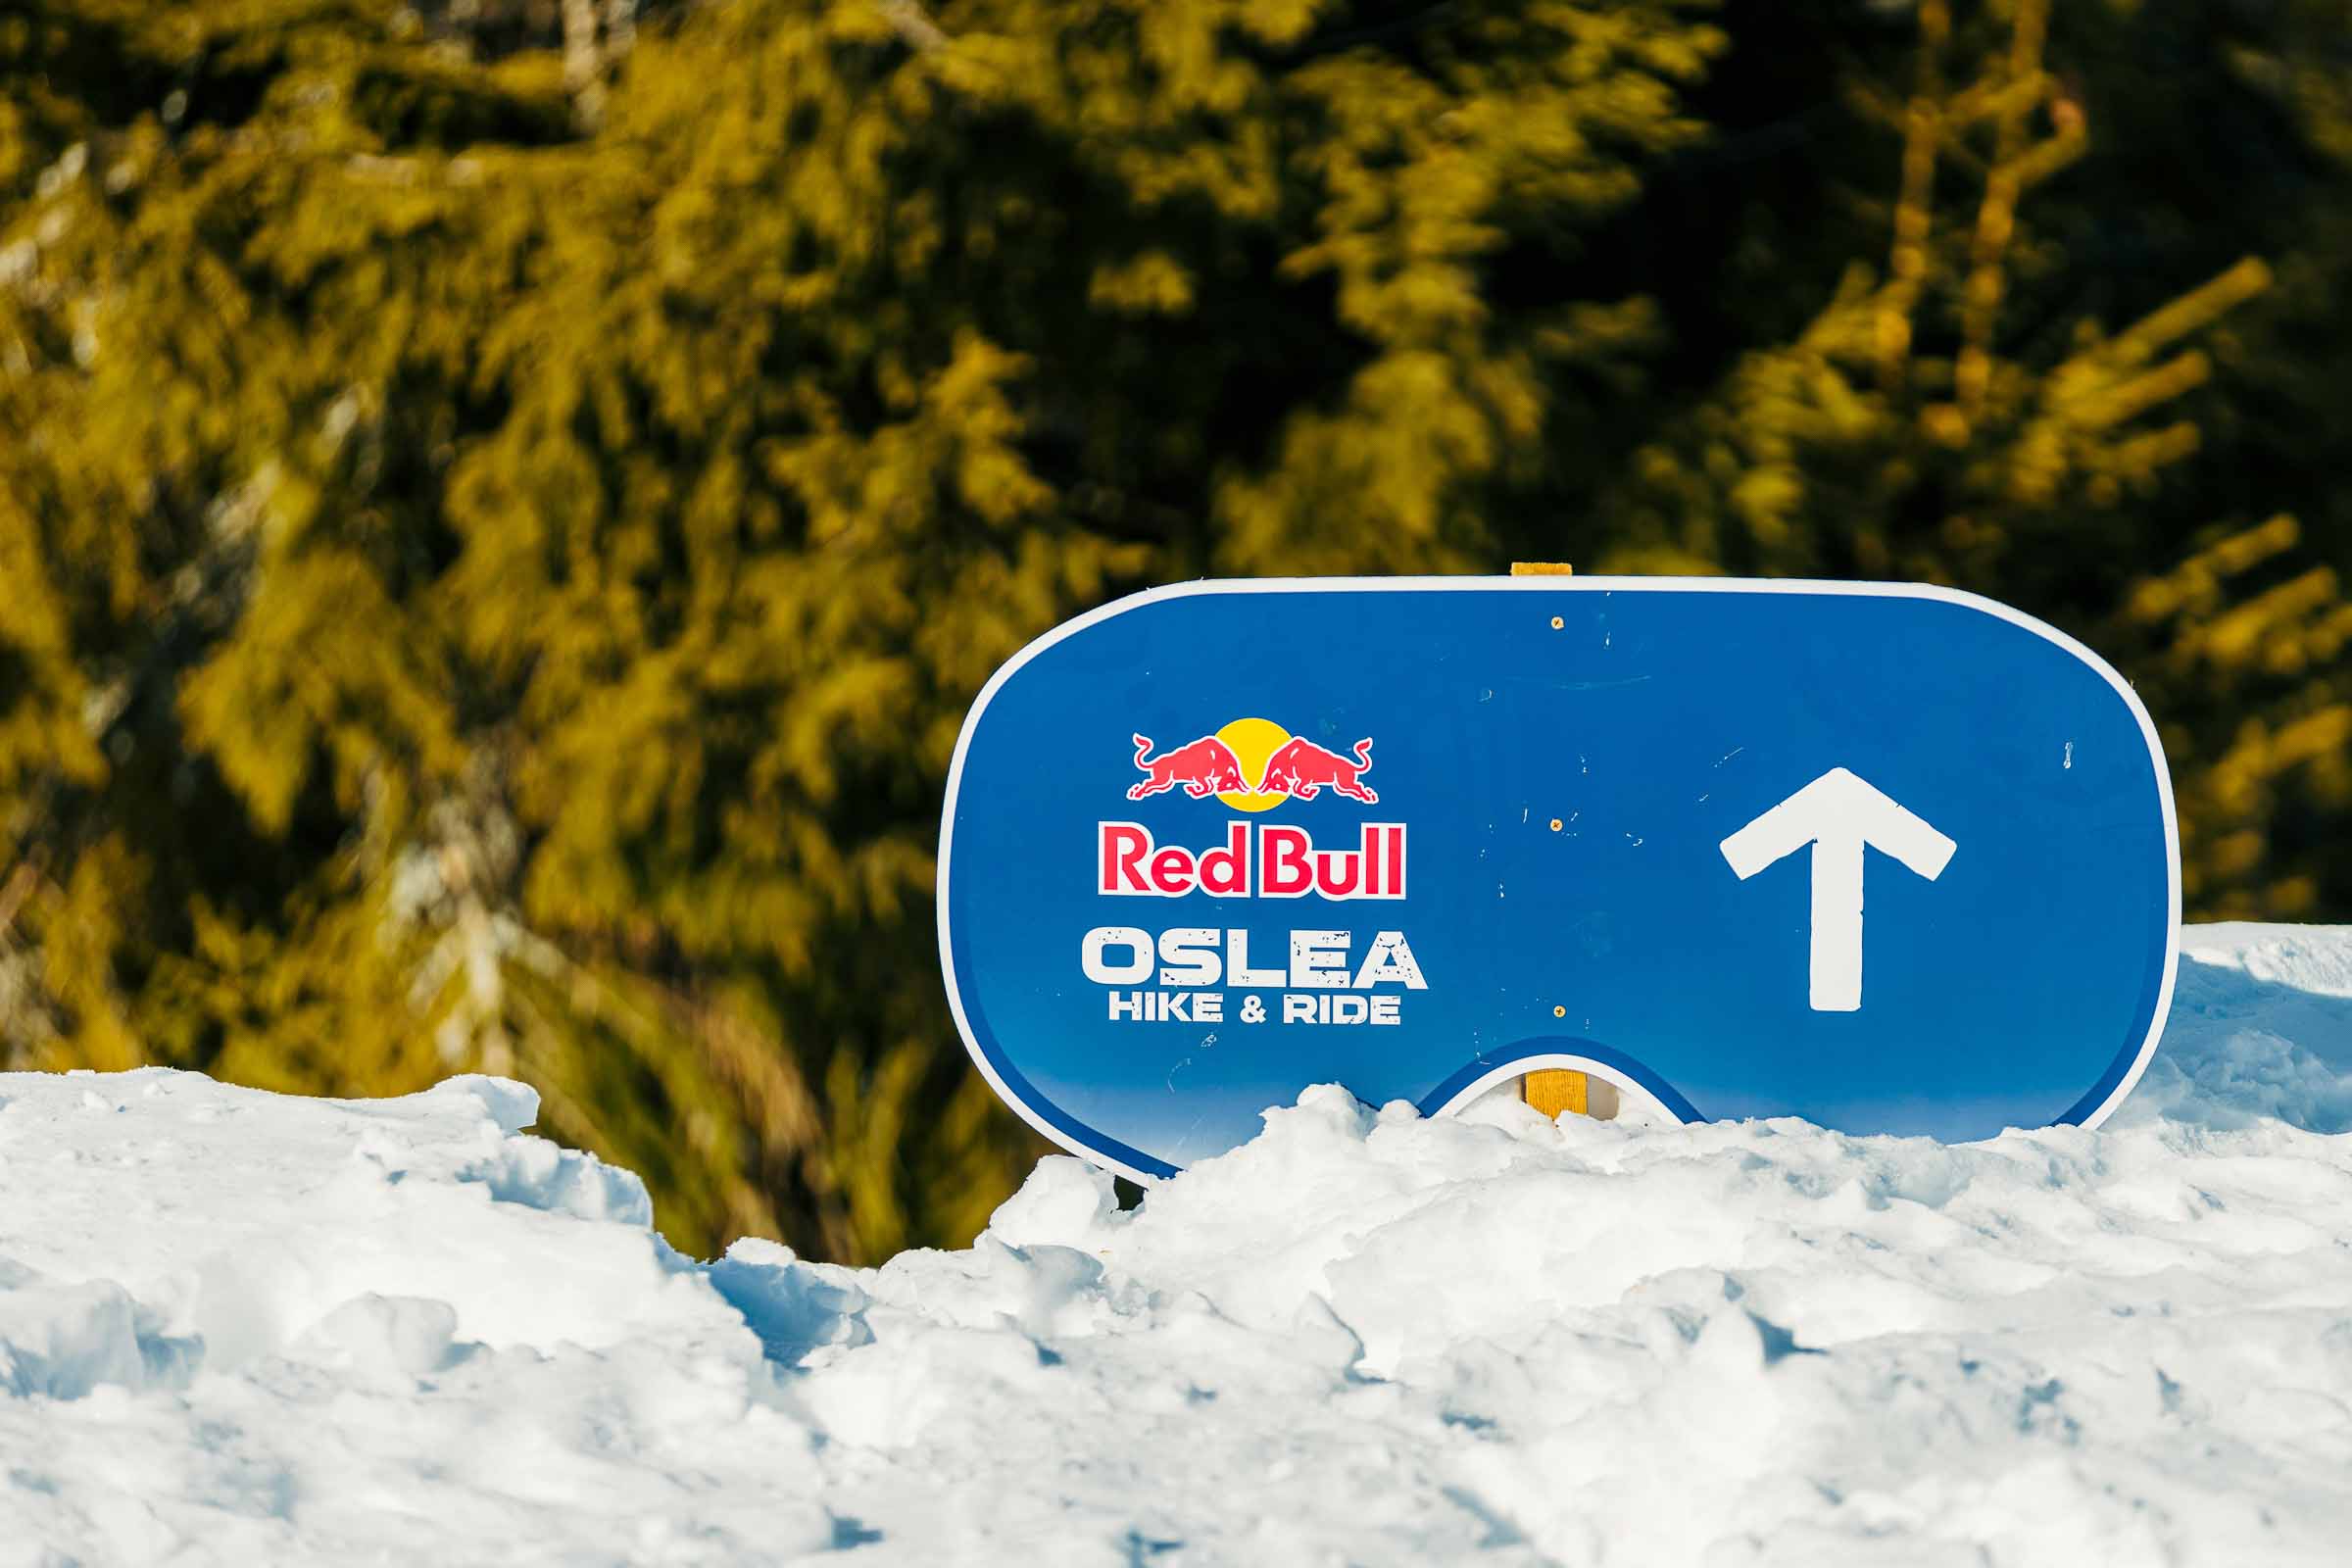 Red Bull Oslea Hike and Ride foamboard sign